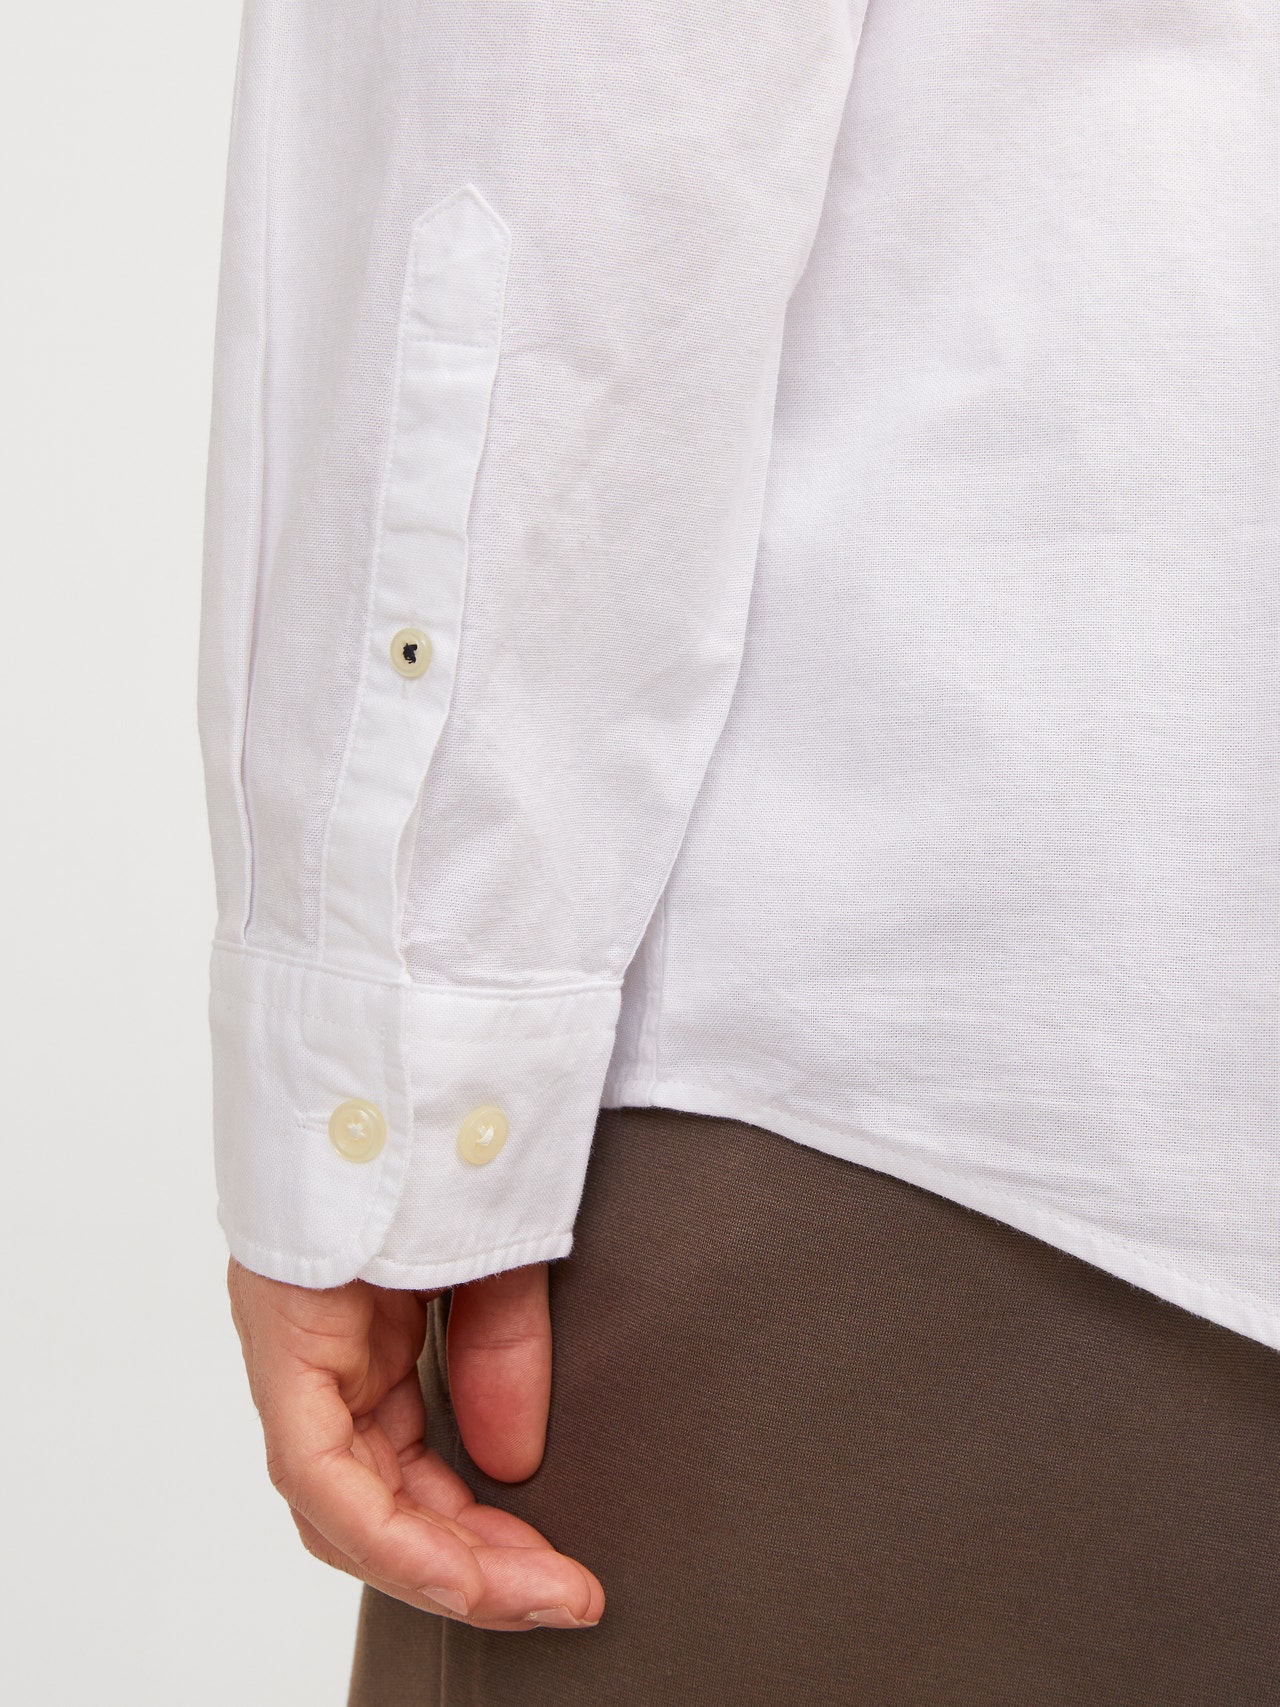 Jack & Jones Slim Fit Avslappnad skjorta -White - 12182486